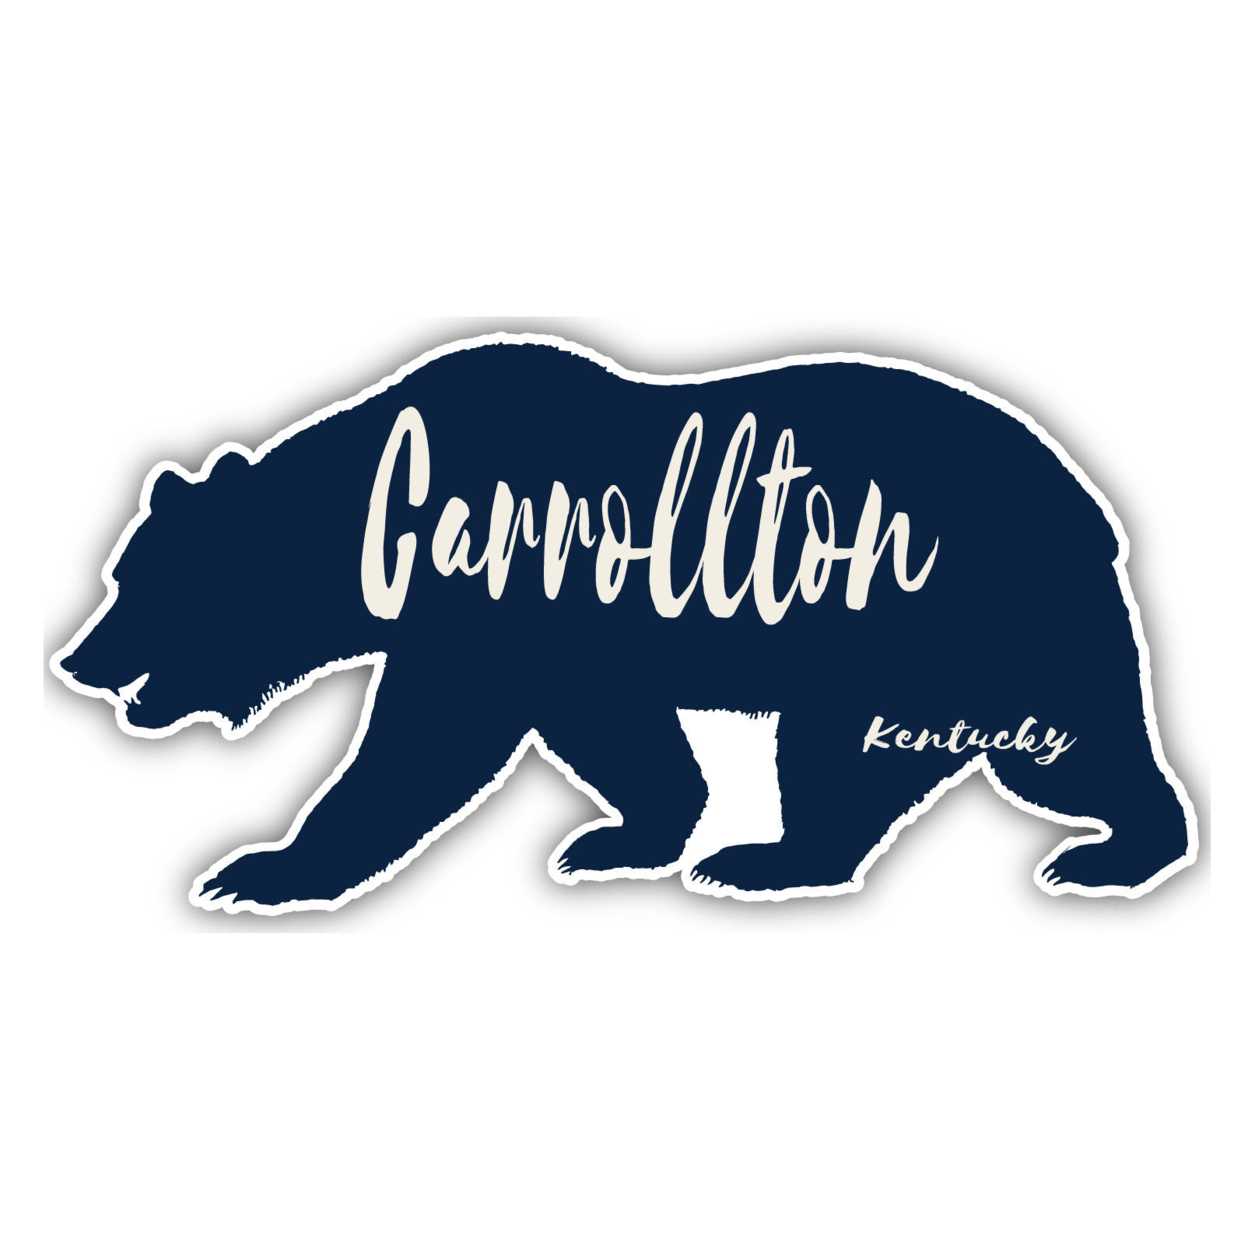 Carrollton Kentucky Souvenir Decorative Stickers (Choose Theme And Size) - 4-Pack, 2-Inch, Bear